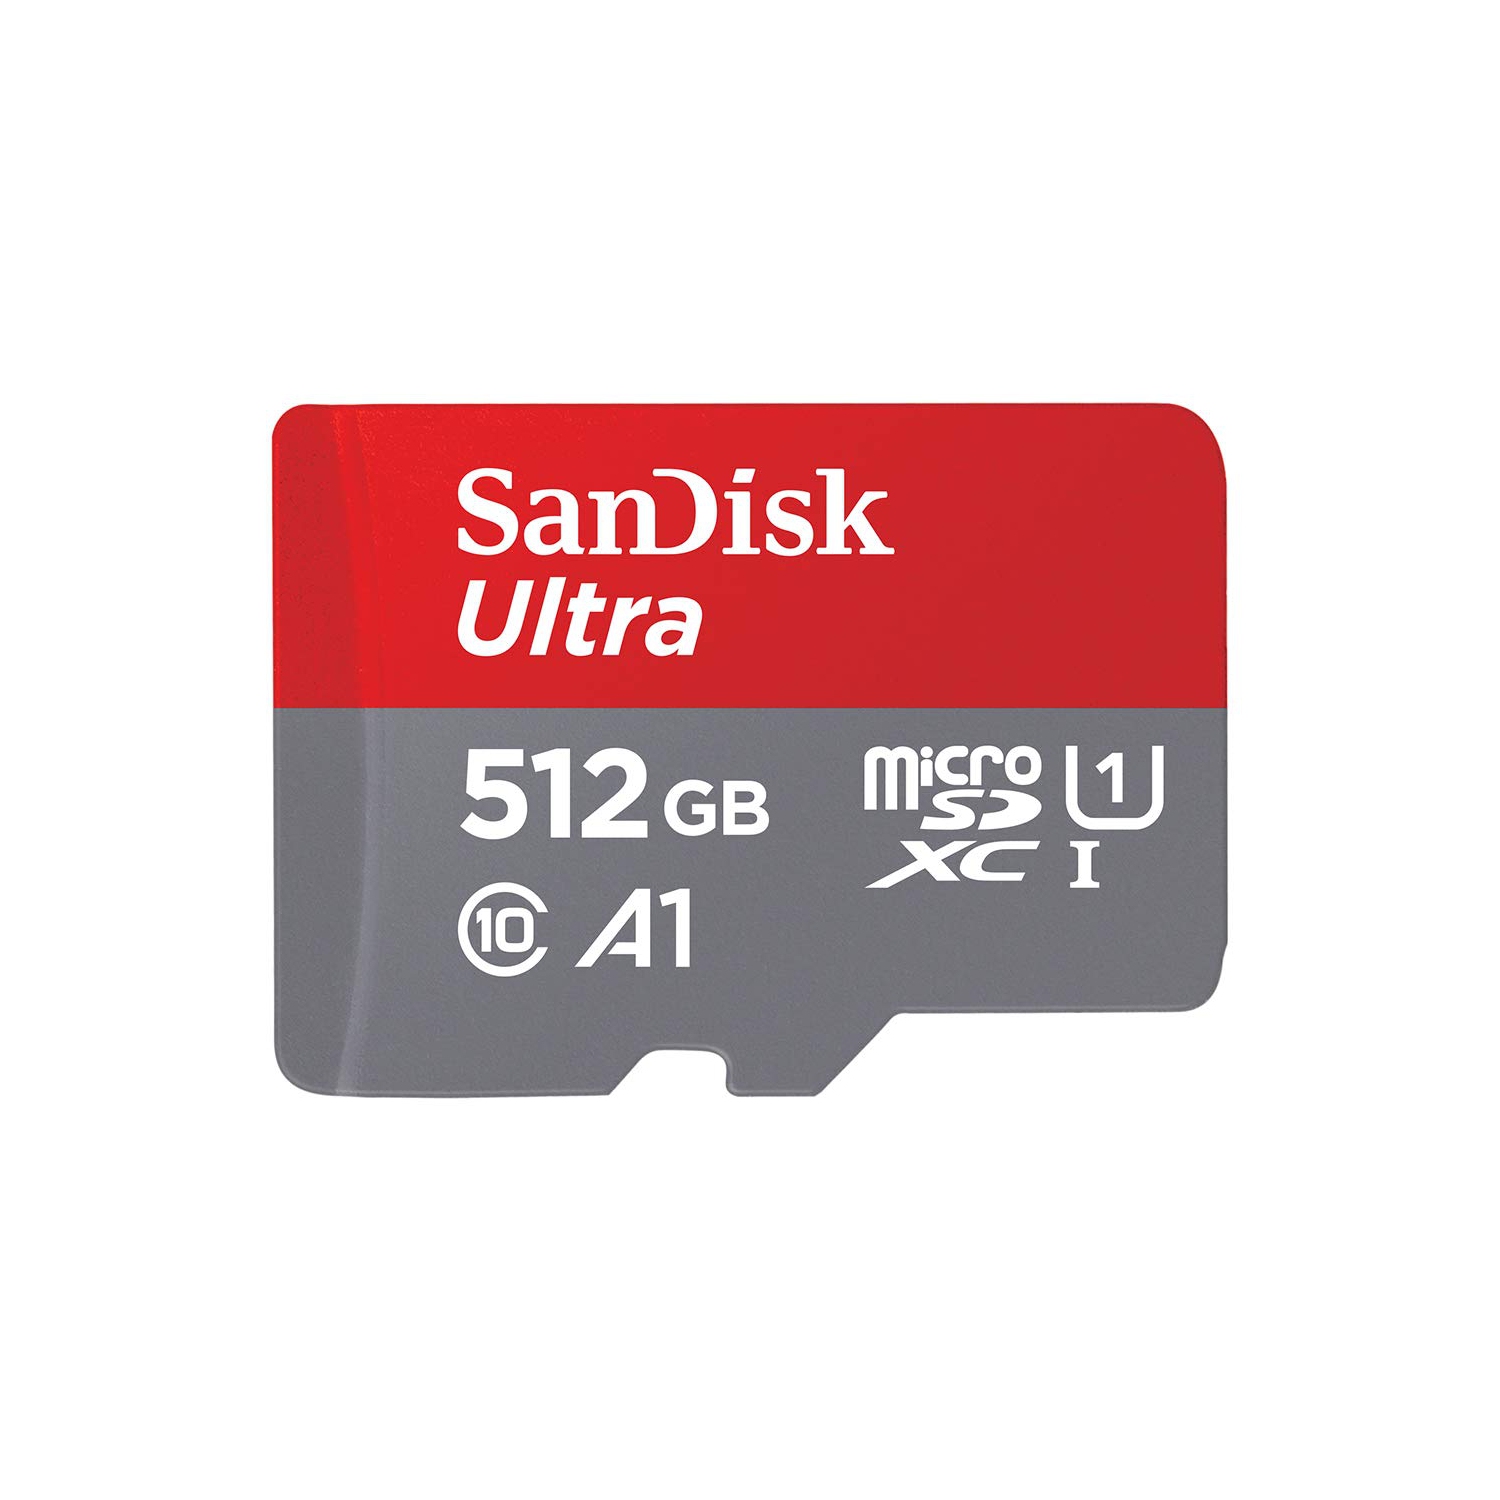 SanDisk Ultra 512GB microSDXC UHS-I Memory Card 150MB/s Micro SD Card SDSQUAC-512G